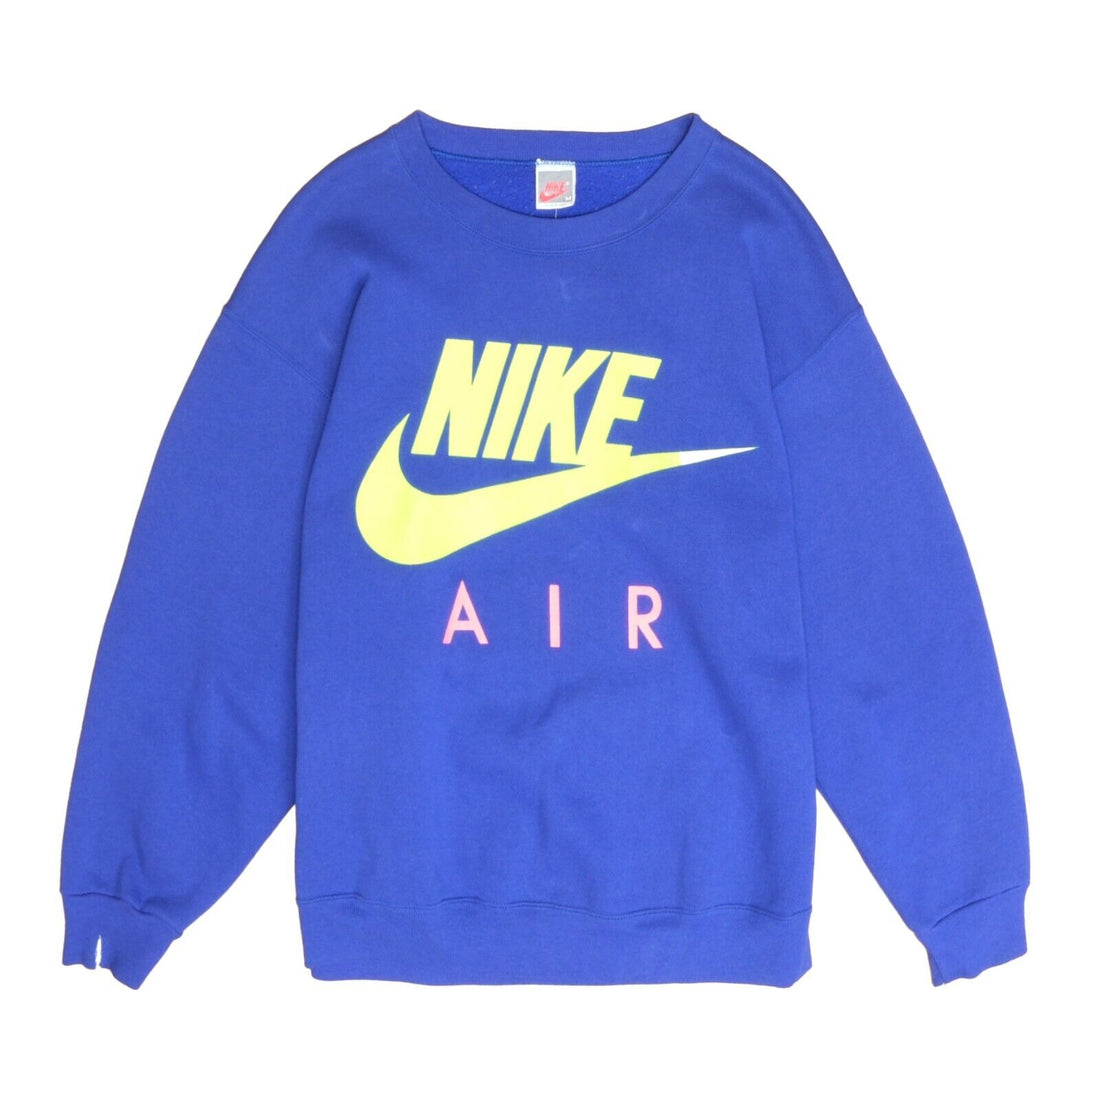 Vintage 90s Nike Sweatshirt 1990s Michael Jordan Shirt 1990s Mars